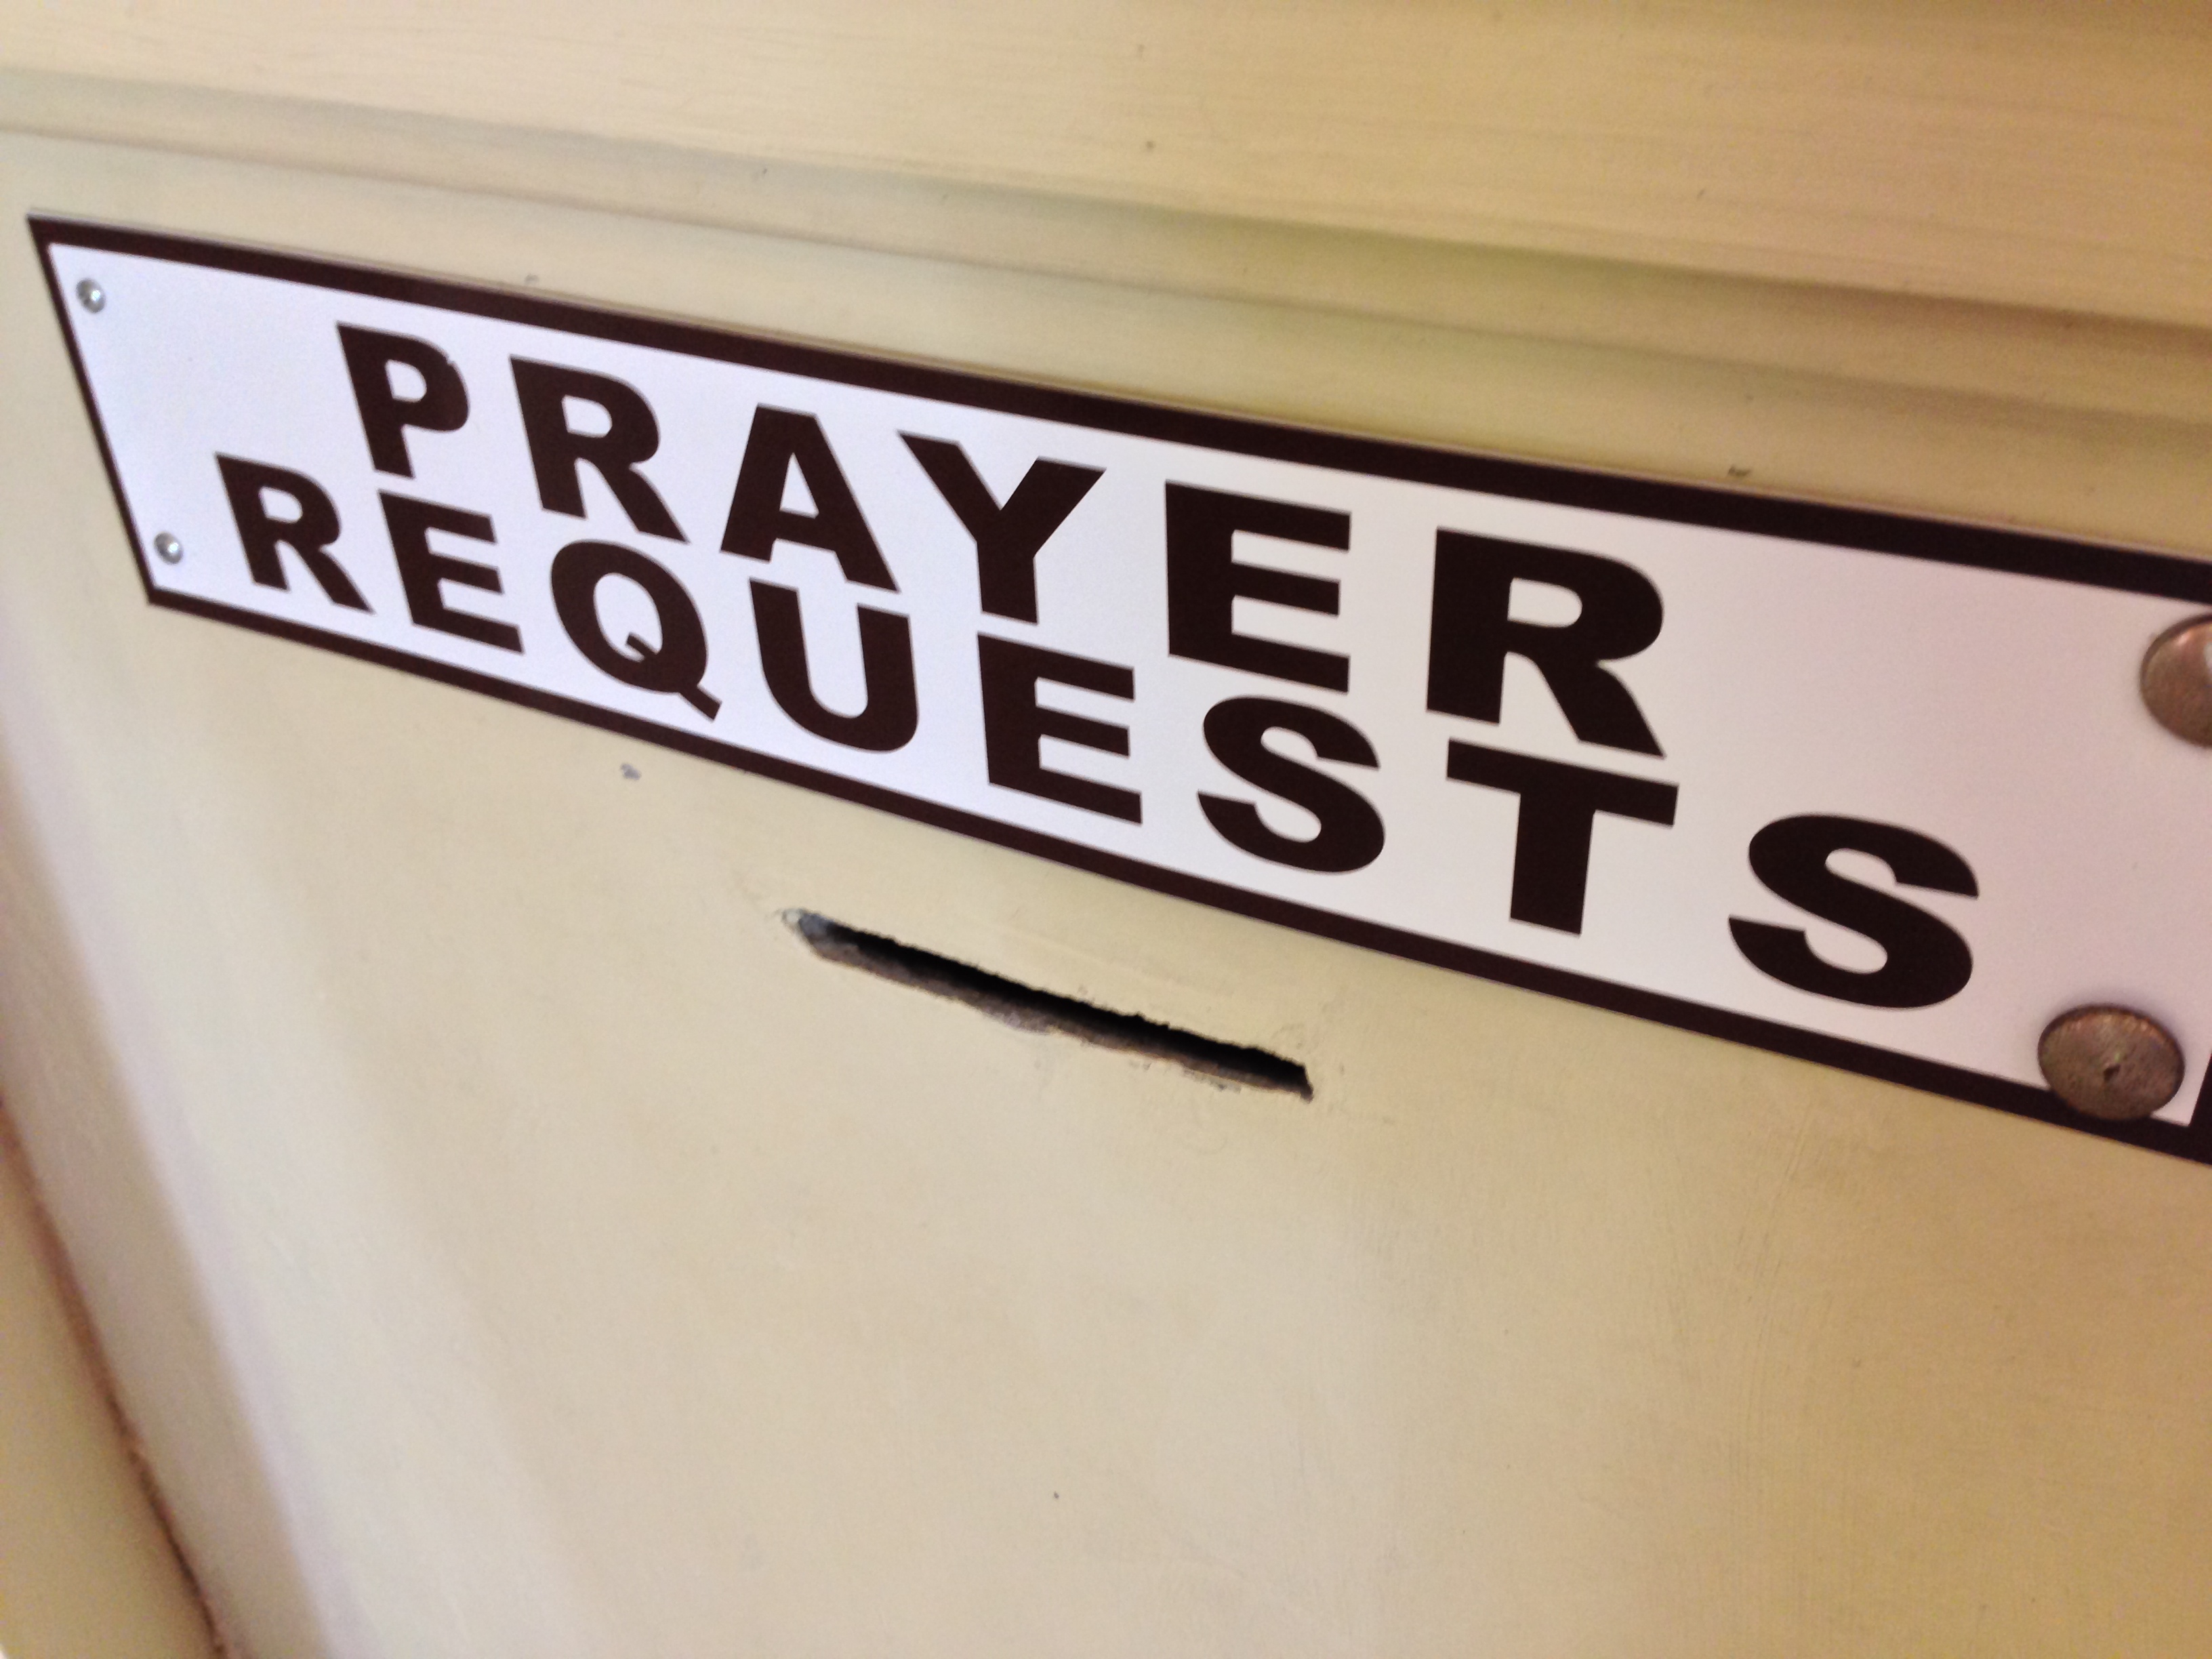 prayer request box